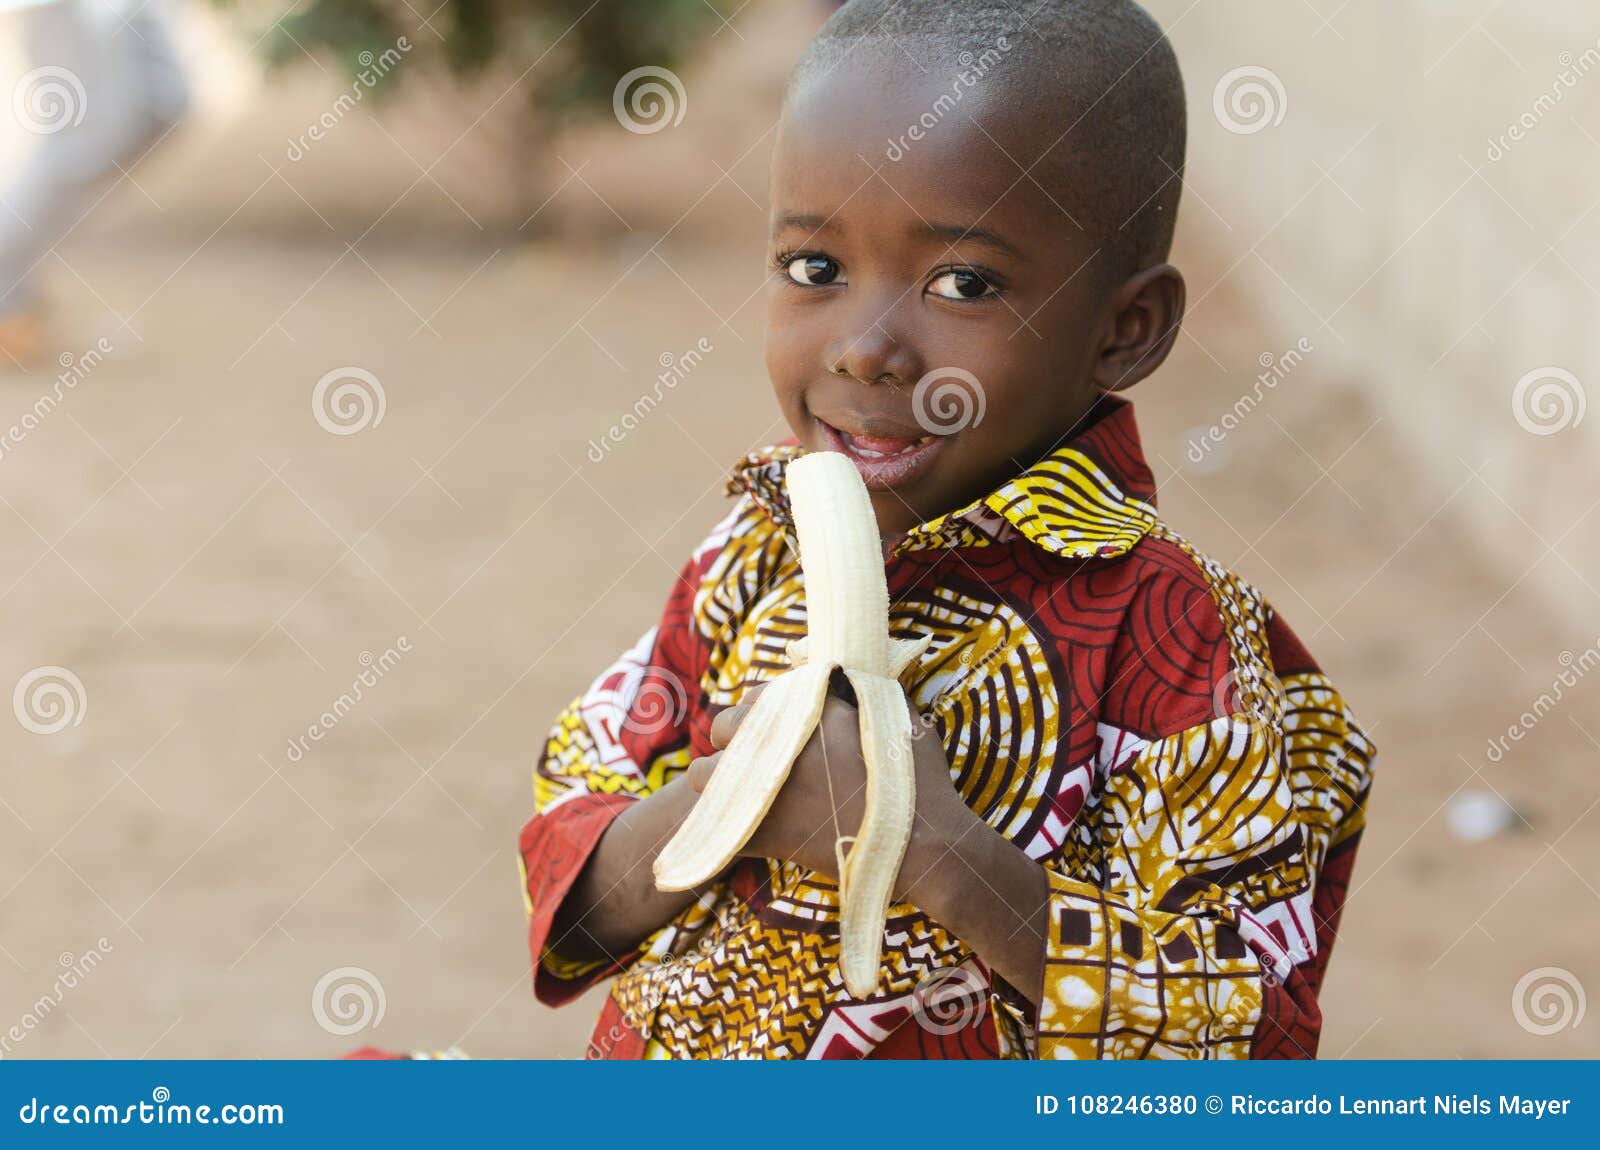 candid shot of african black boy eating banana outdoor